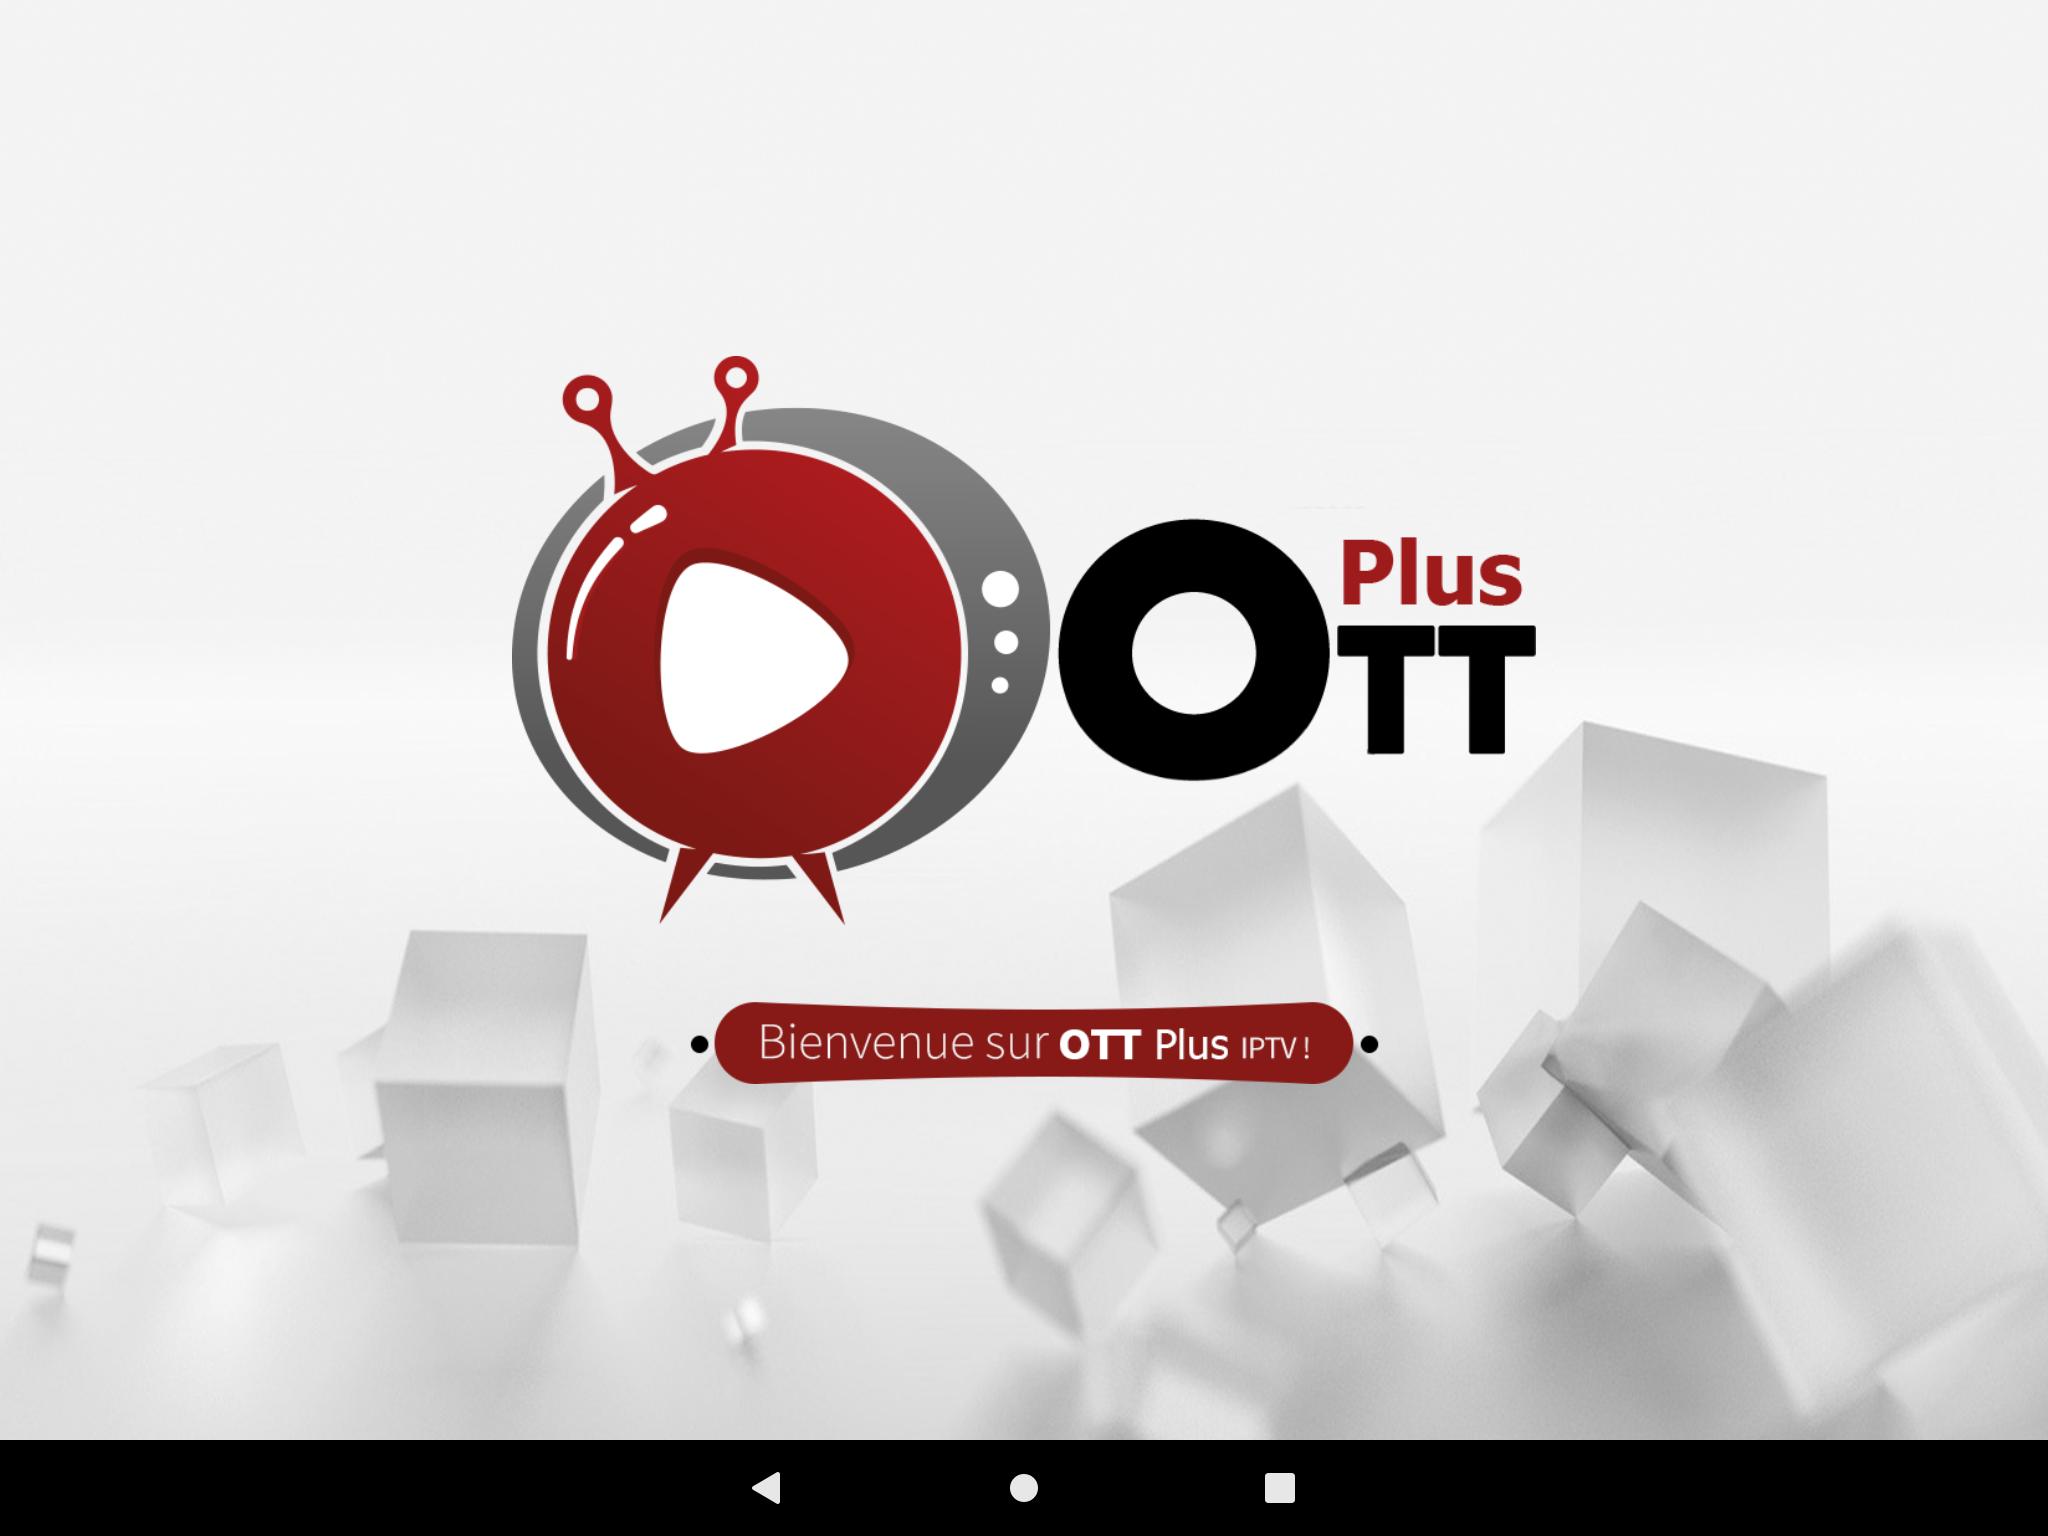 Ott Plus Iptv For Android Apk Download